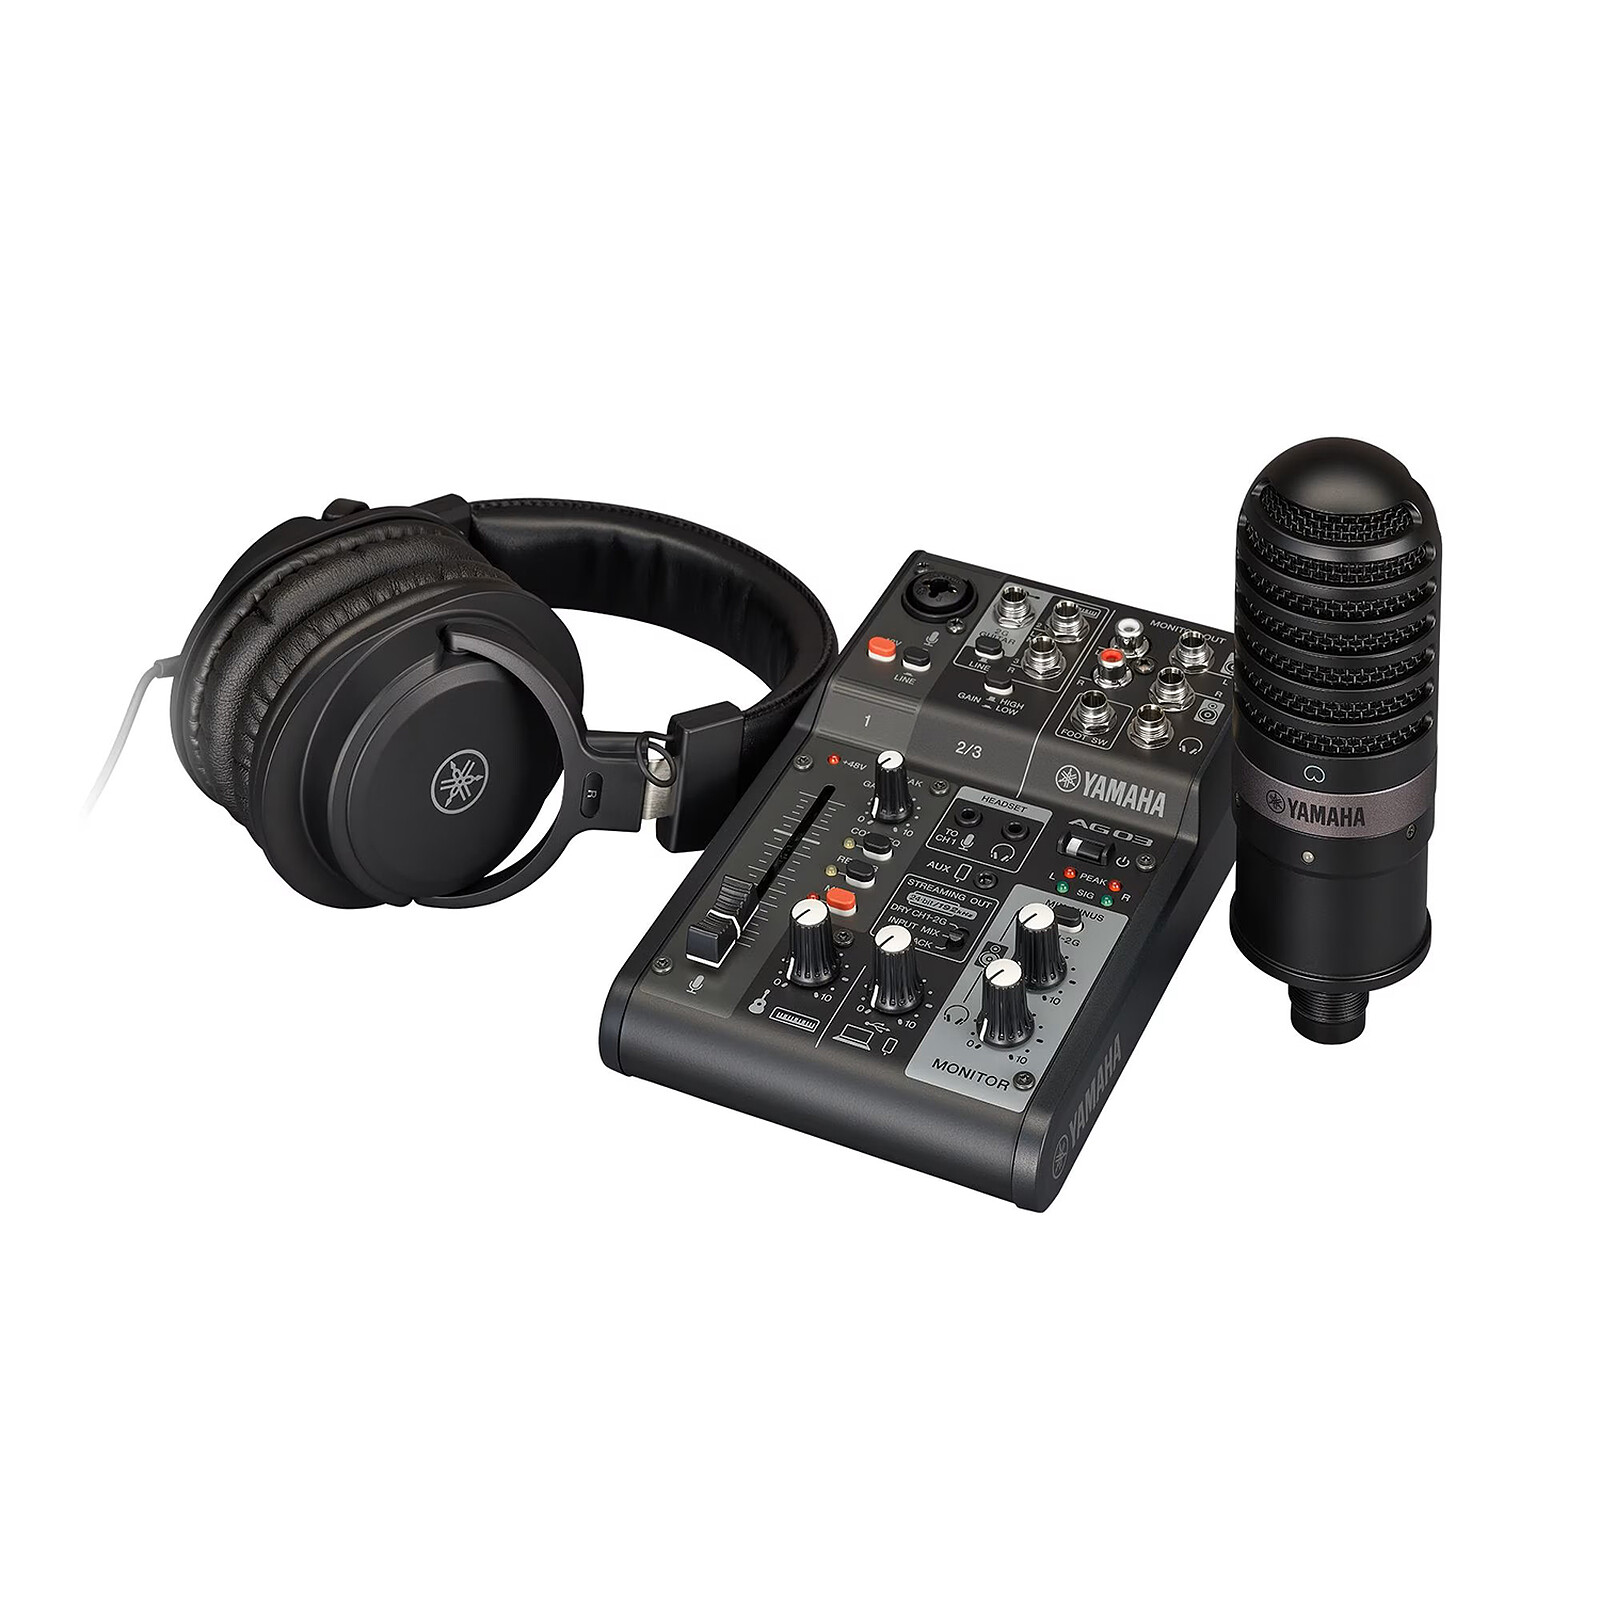 Mezclador de audio HyperX - Accesorios Streaming - LDLC